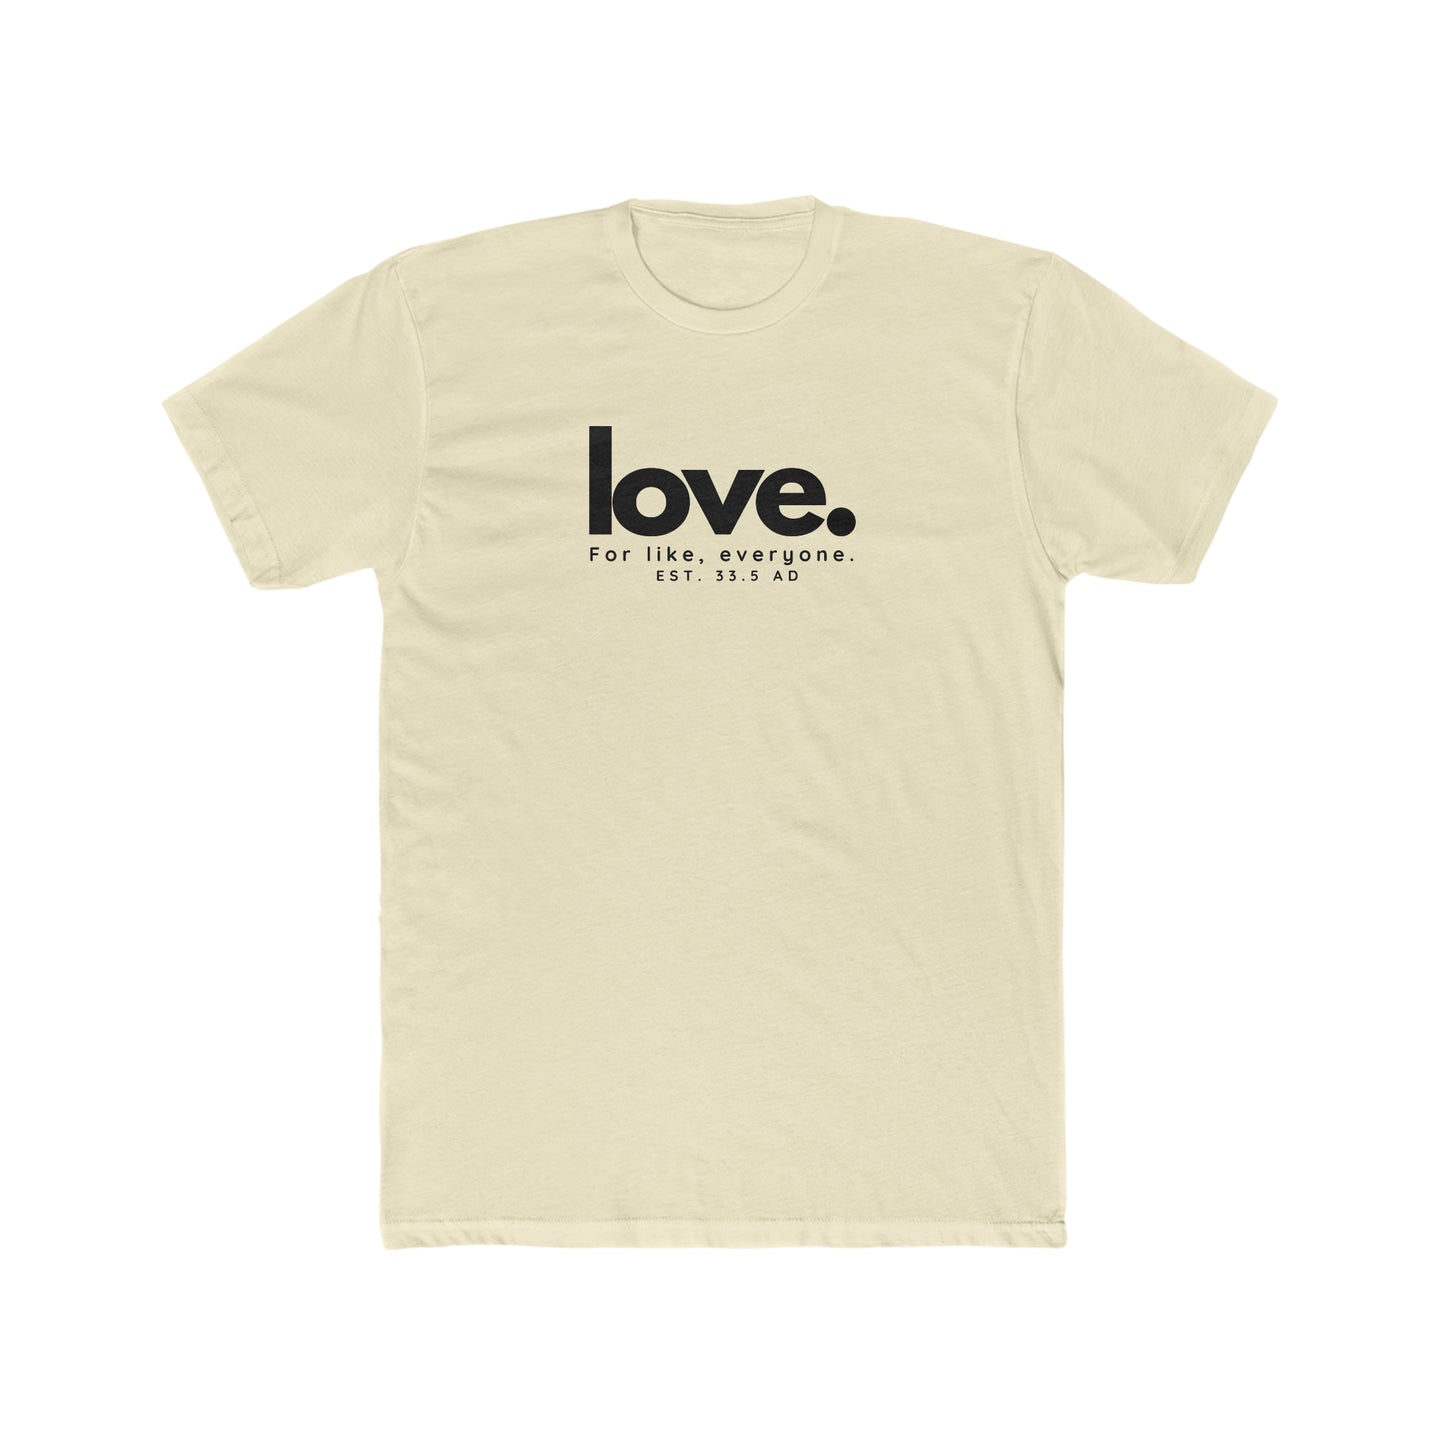 Love for everyone: Men's Cotton Crew Tee